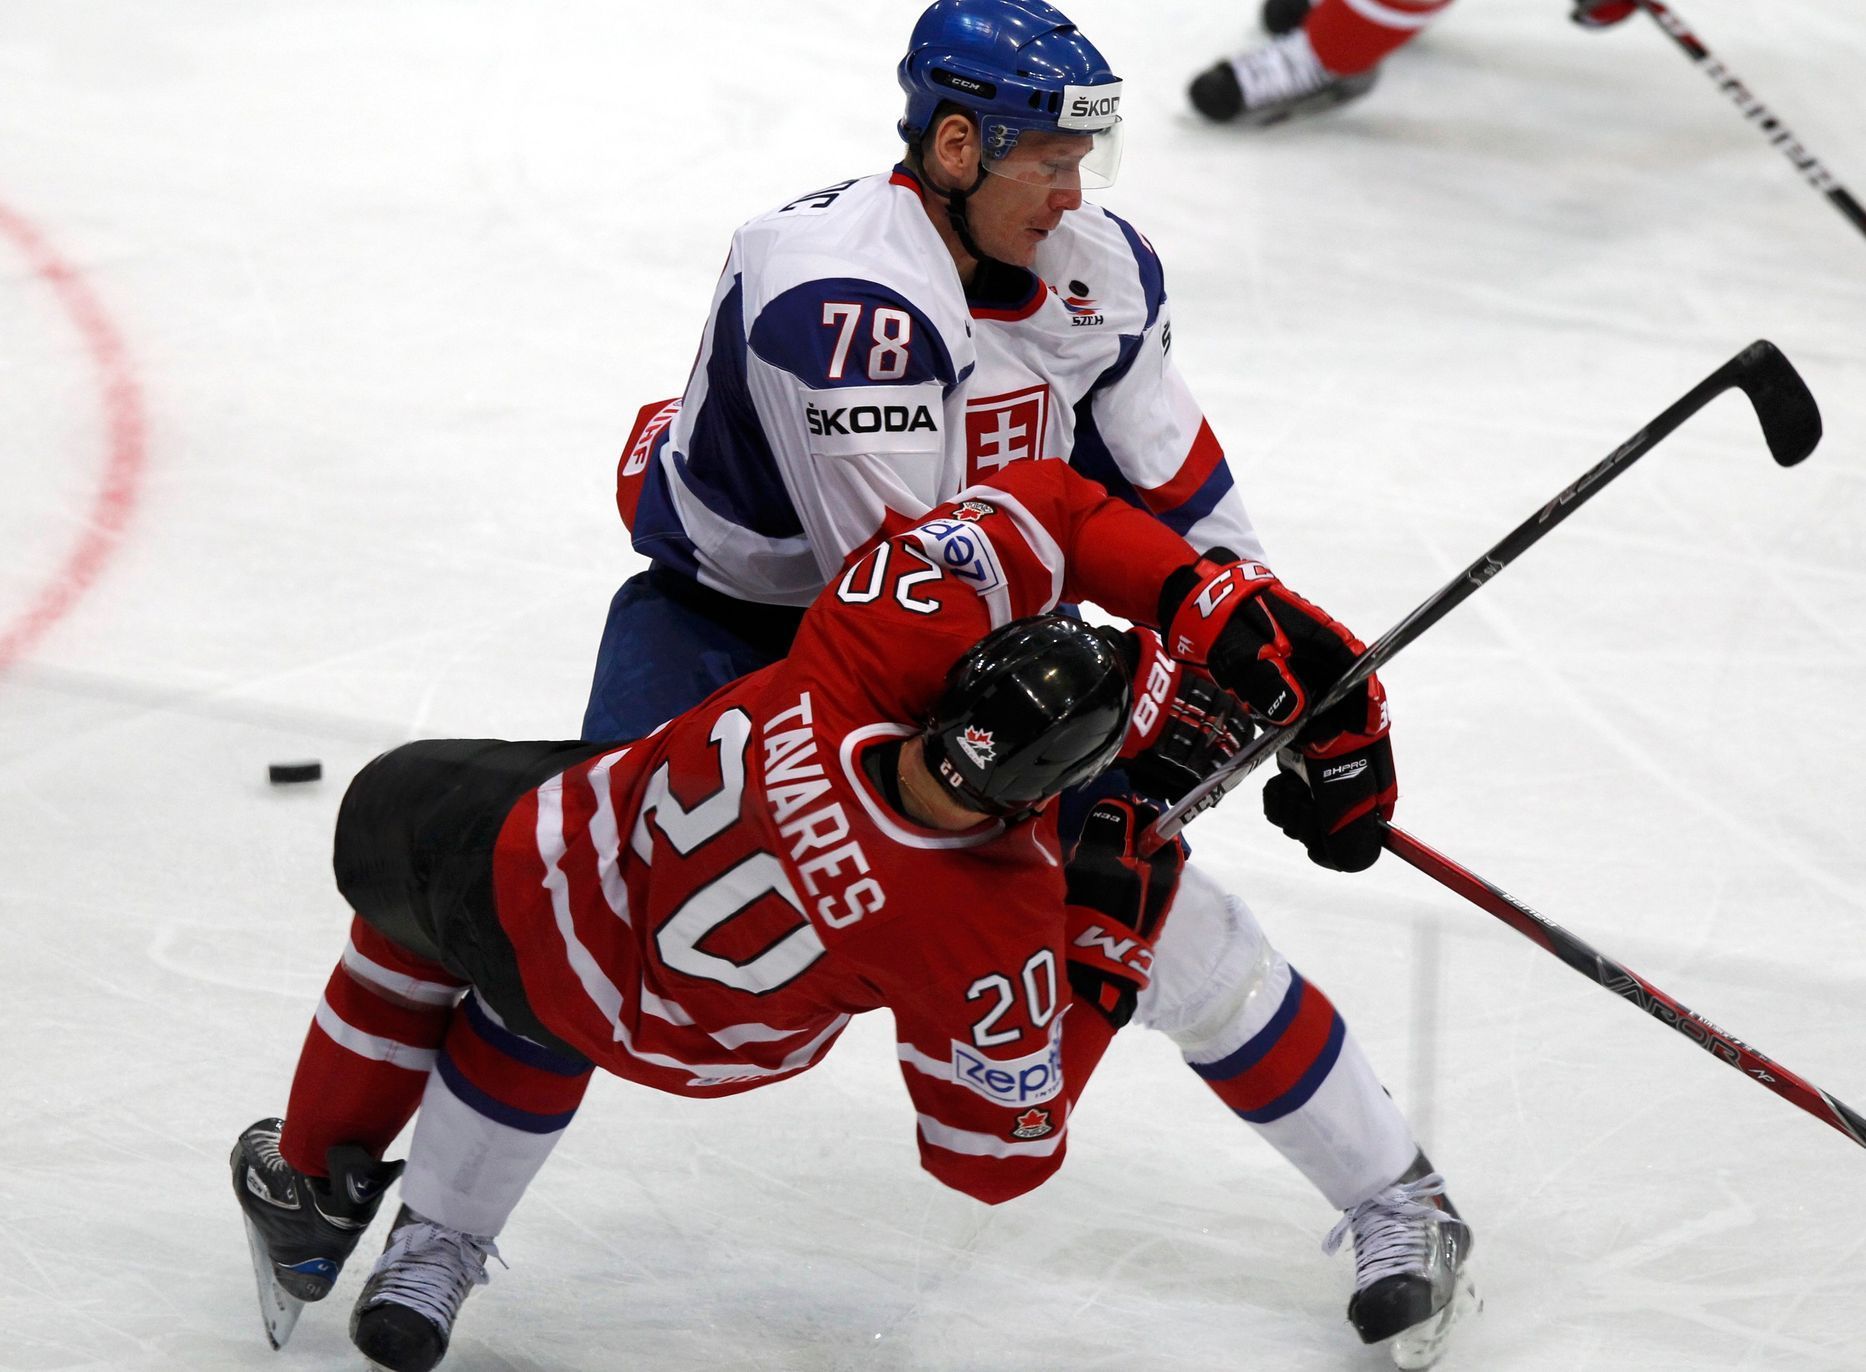 Kristian Kudroč a John Tavares v utkání MS v hokeji 2012 Kanada - Slovensko